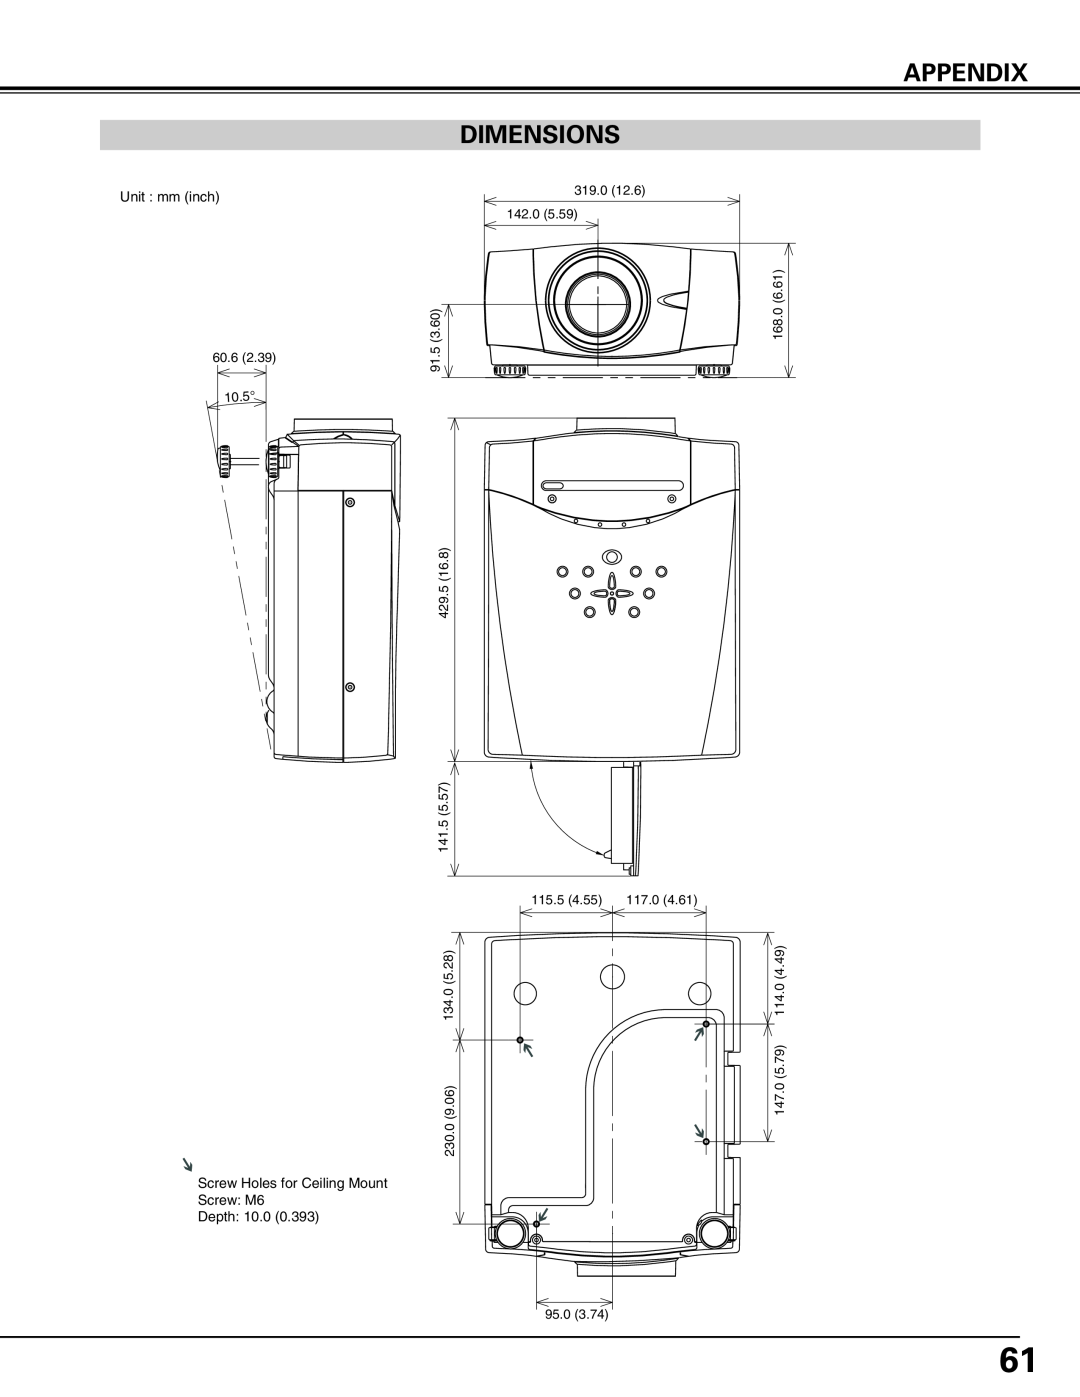 Canon LV-7575 user manual Dimensions, Appendix, Unit mm inch, Screw Holes for Ceiling Mount Screw M6 Depth 10.0 